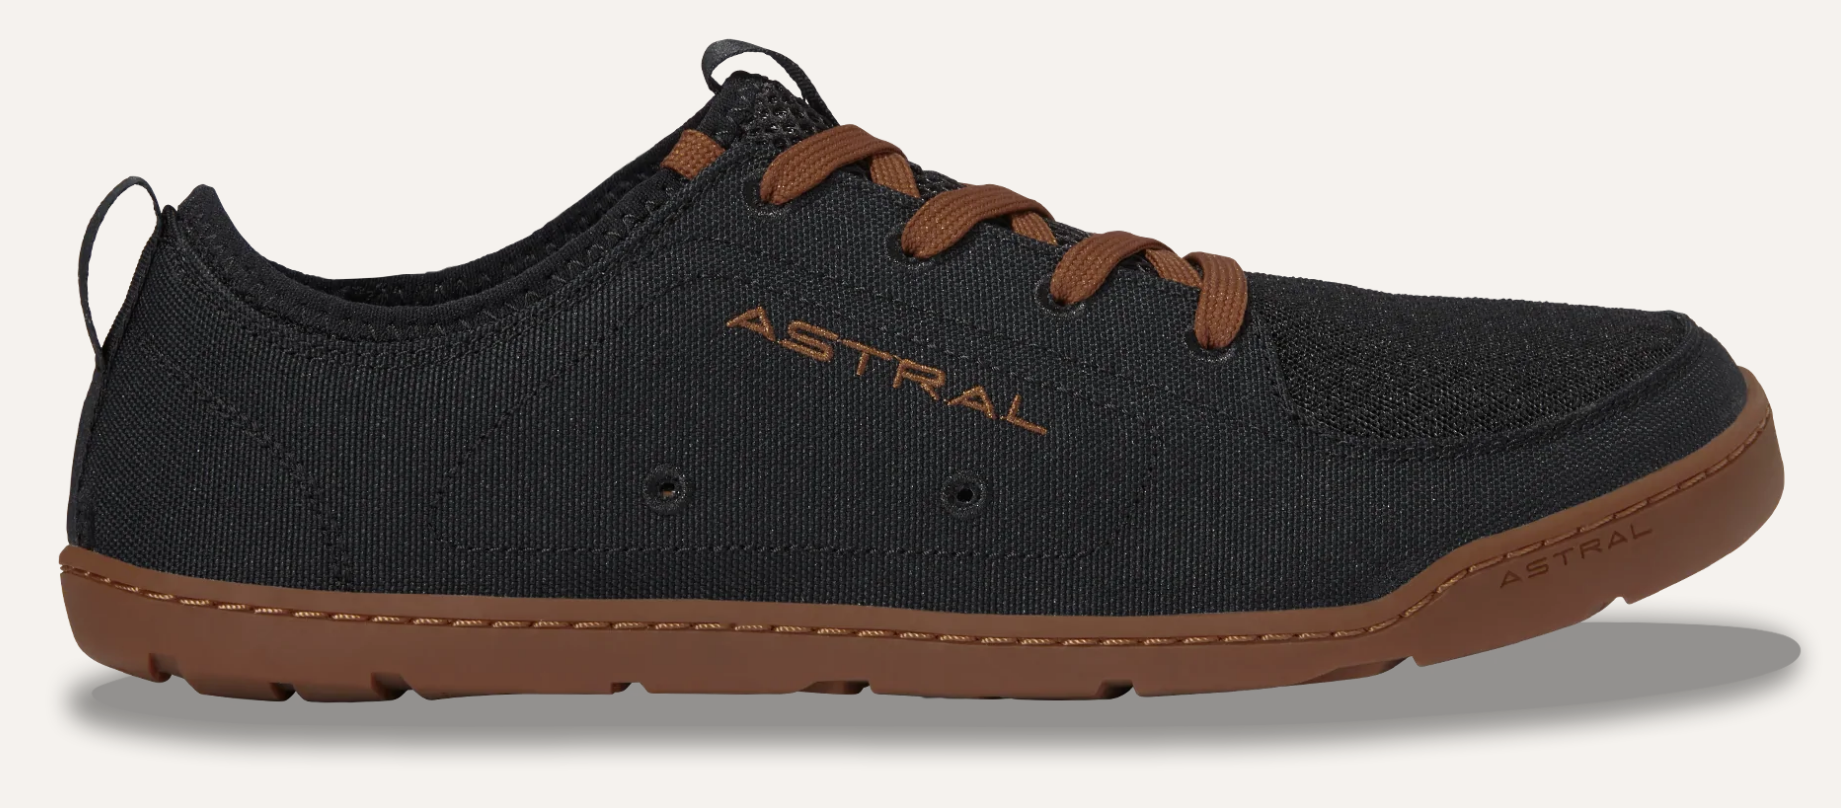 Astral Loyak Men's Water Shoes